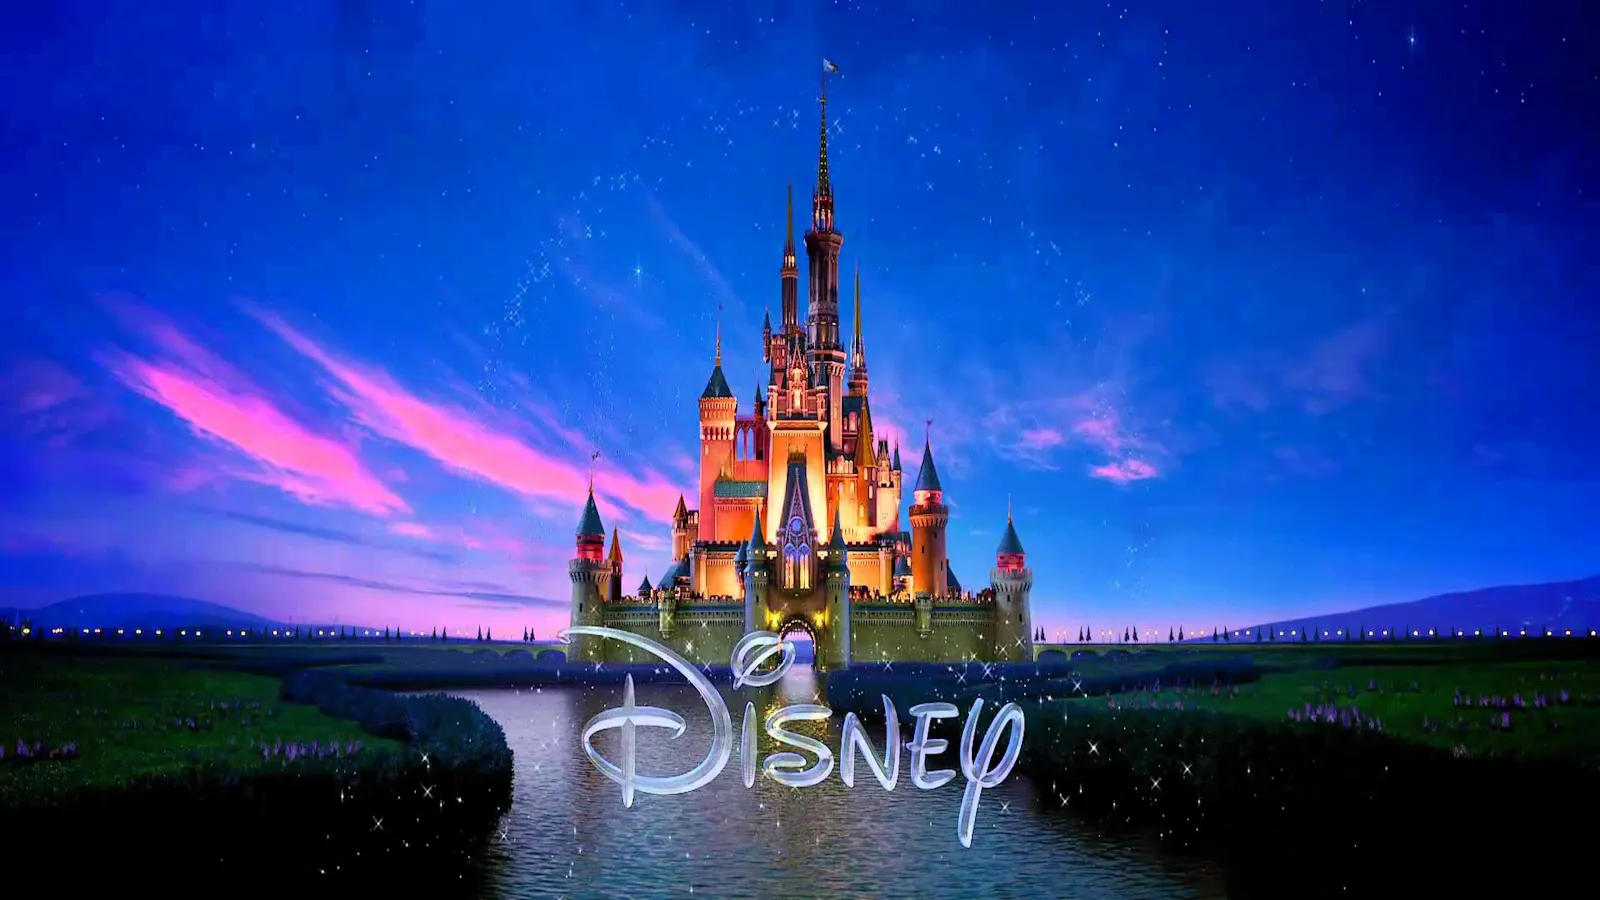 Schloss vor blauem Nachthimmel, davor Disney-Schriftzug